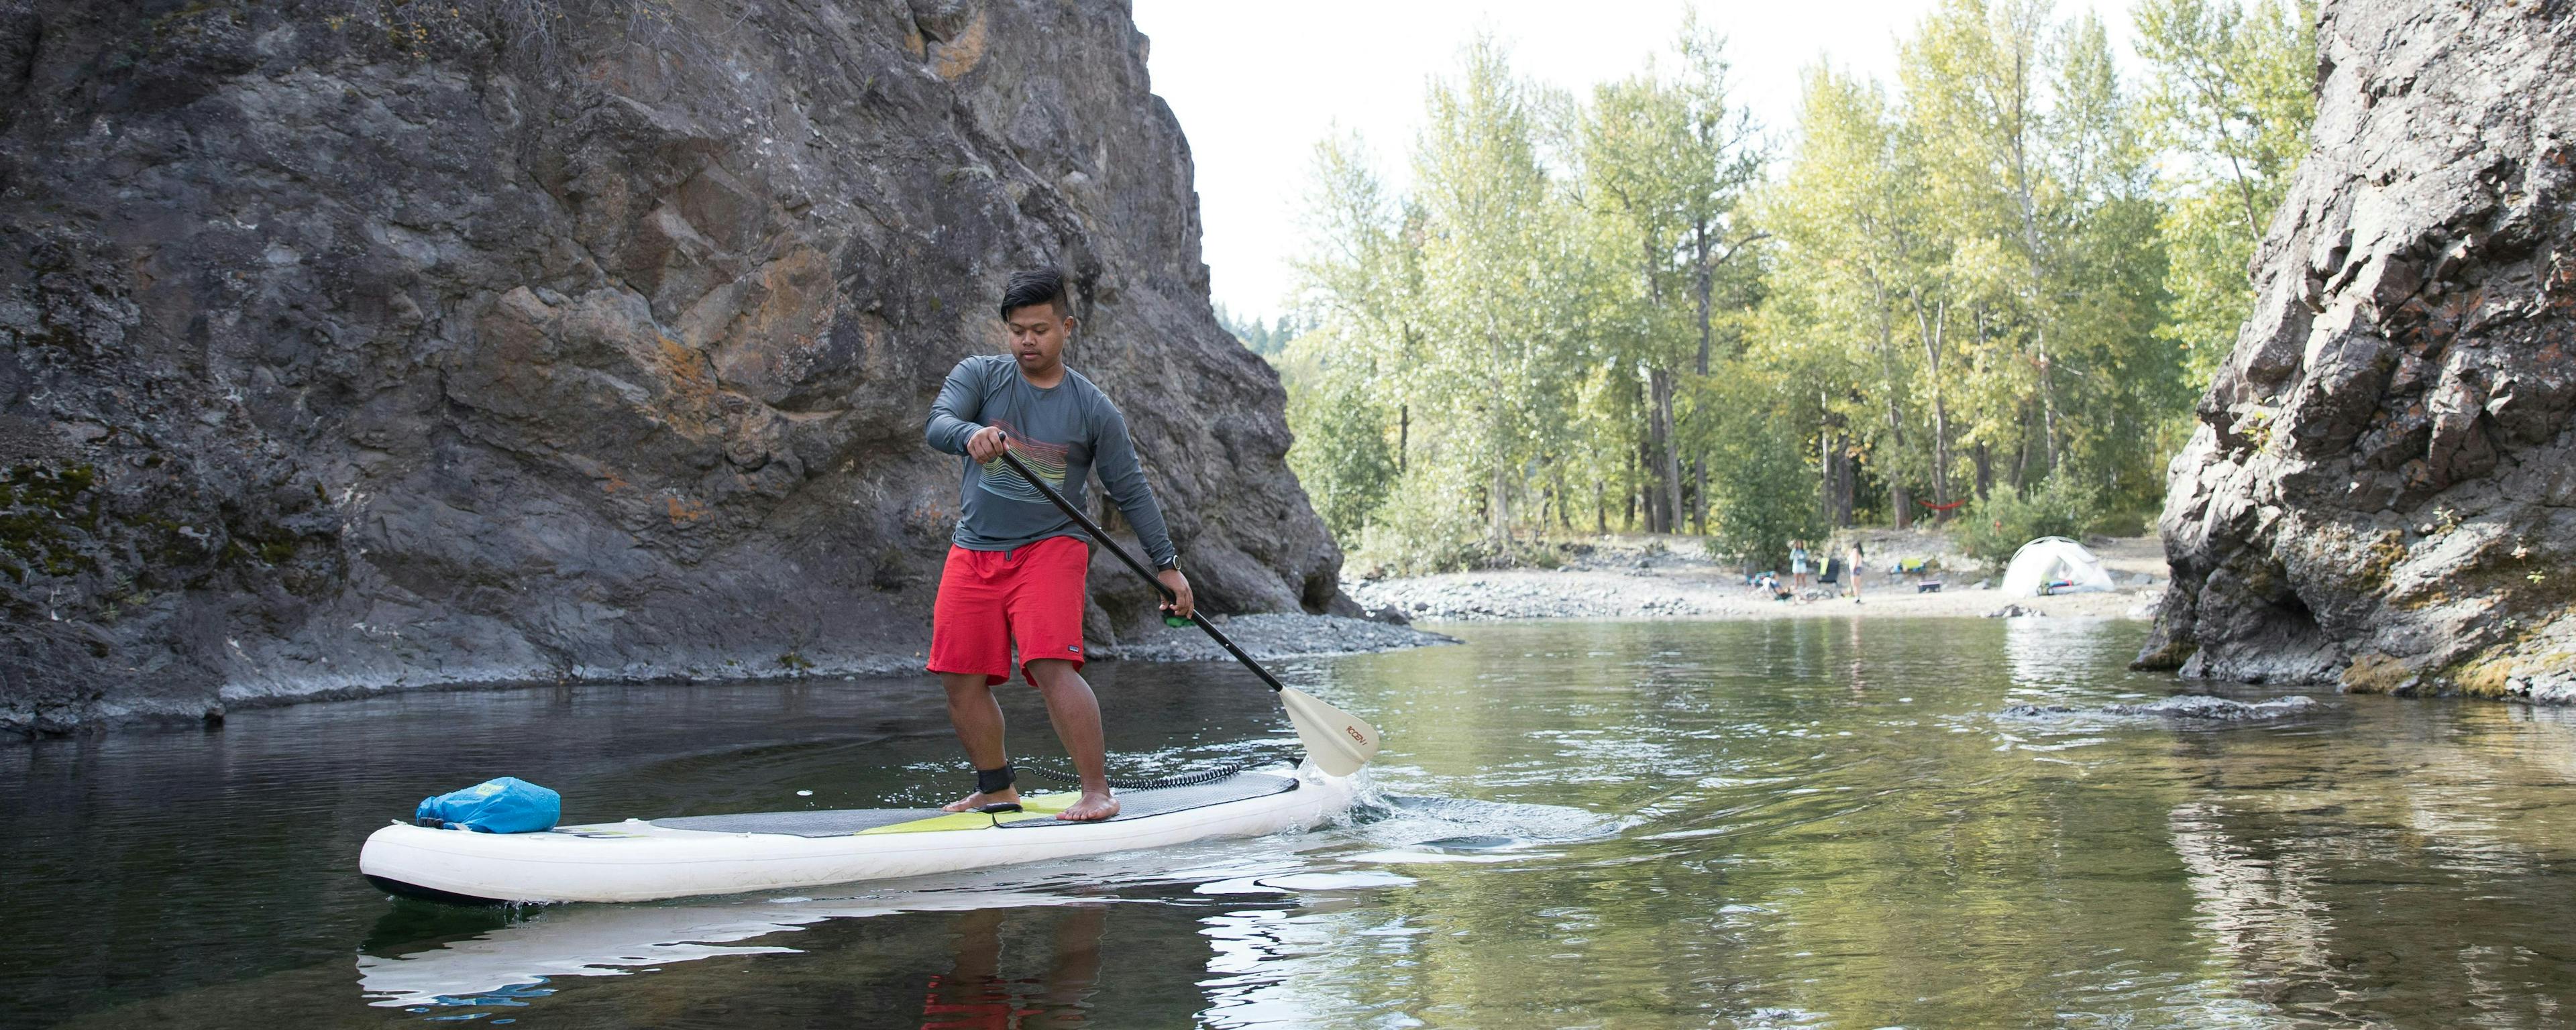 Infographic: Canoe, kayak or SUP?